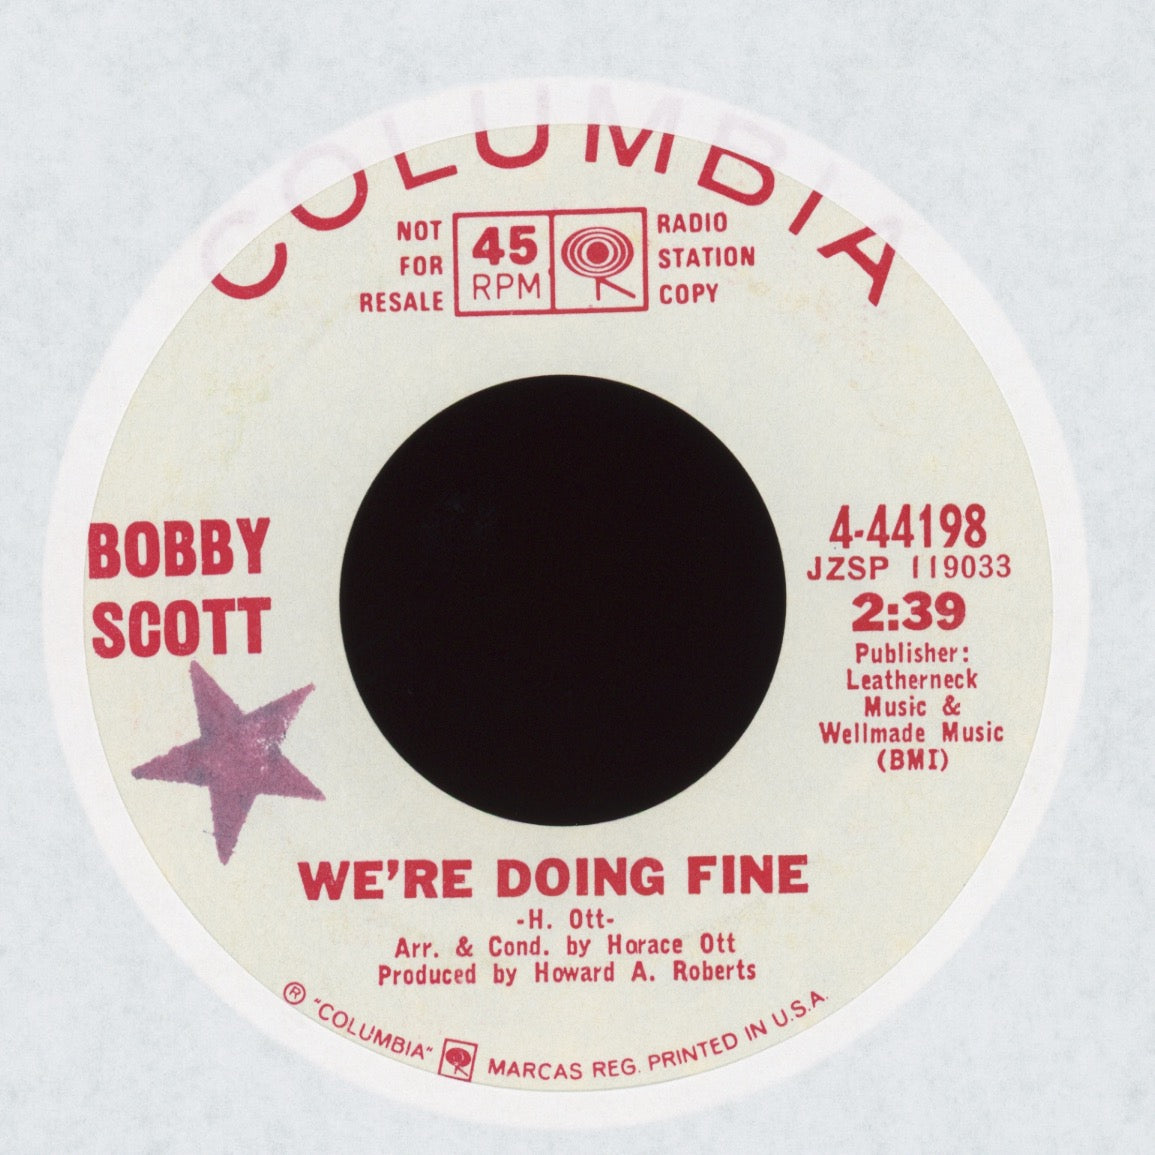 Bobby Scott - We're Doing Fine on Columbia Promo